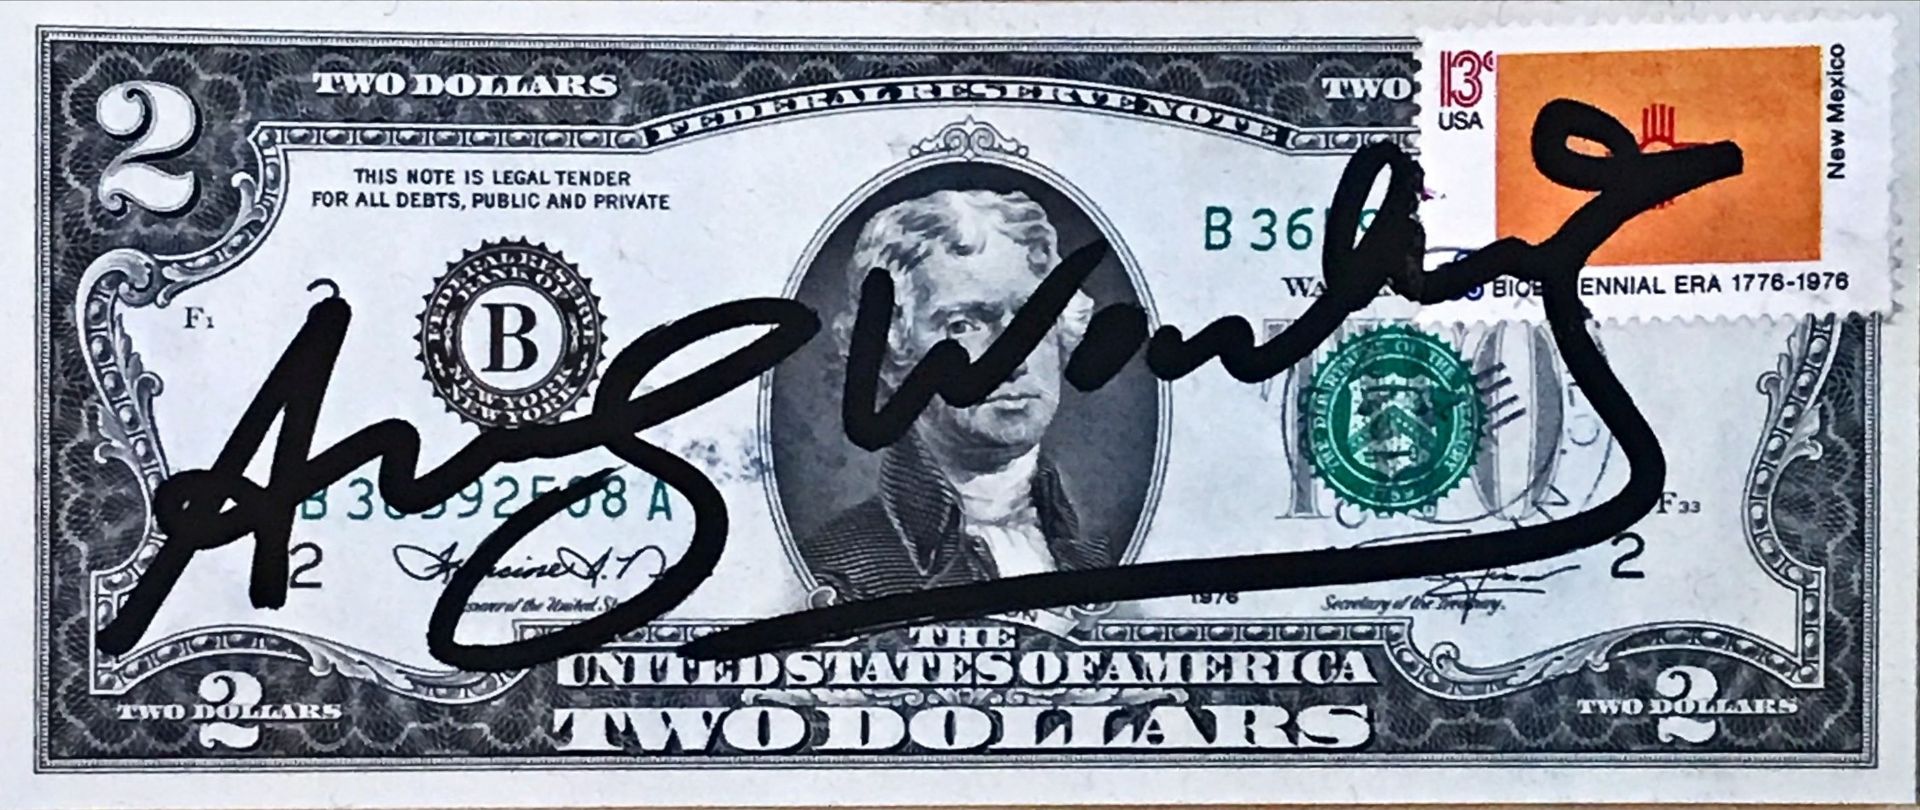 Andy Warhol "2 Dollar Bill"